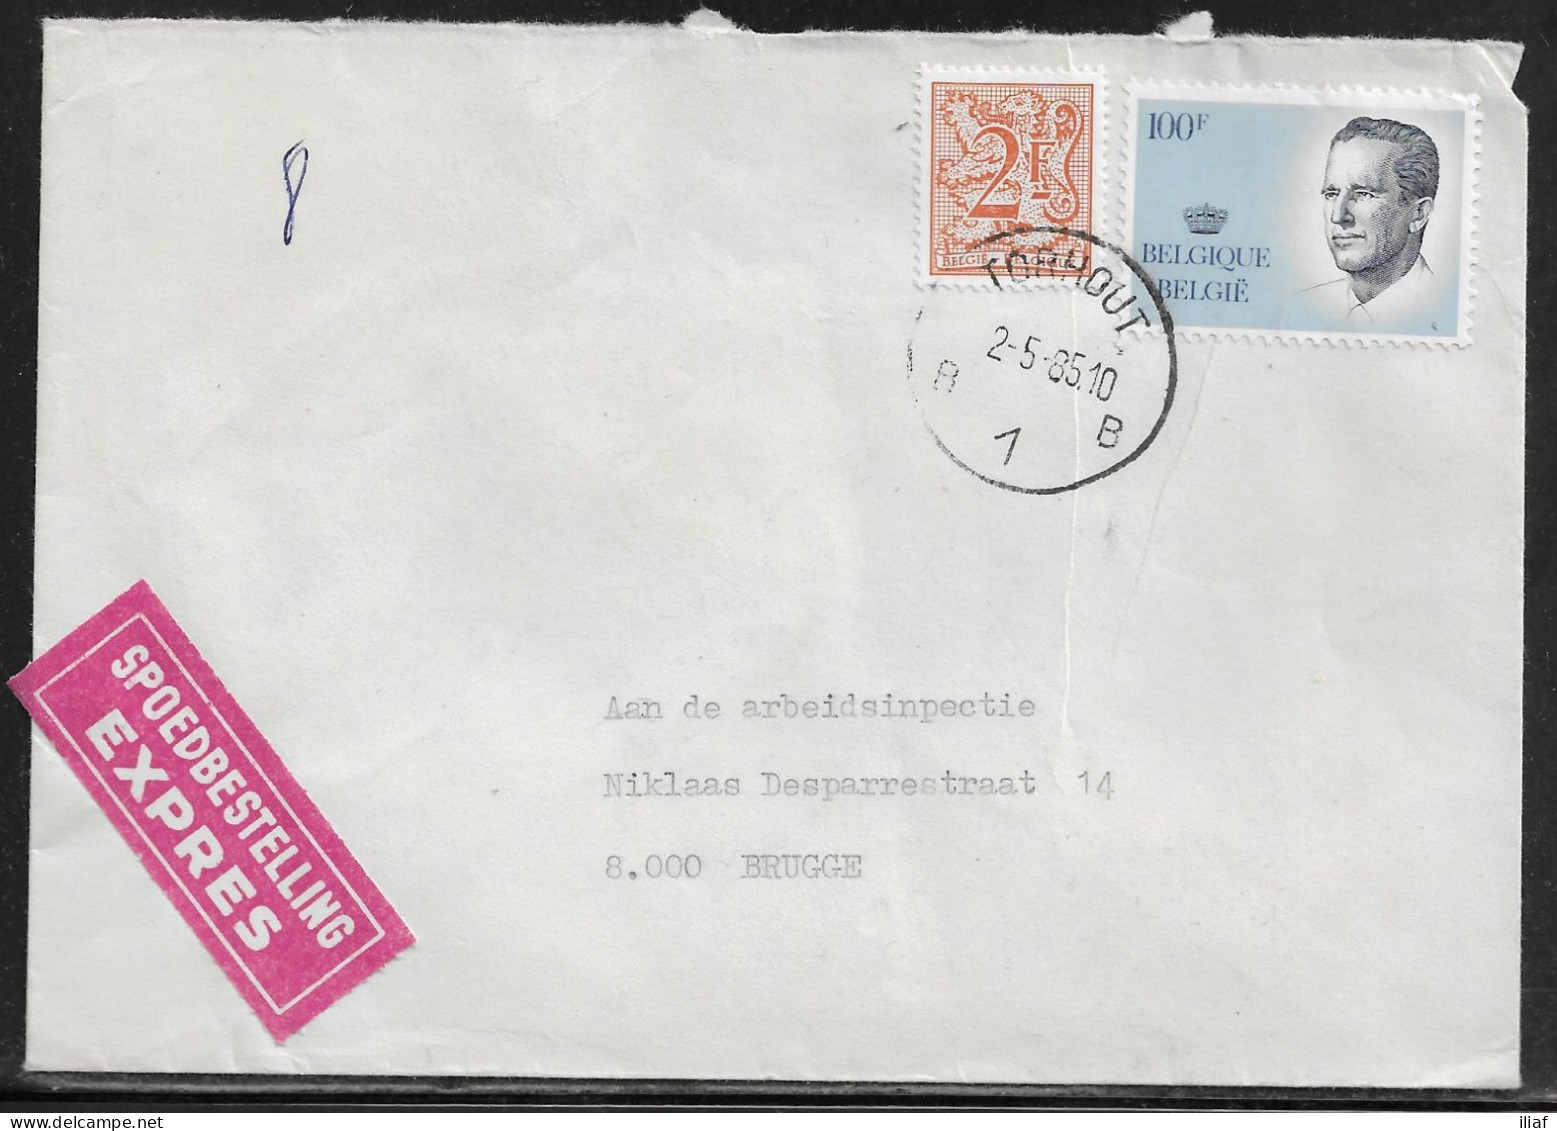 Belgium. Stamps Mi. 2189, Mi. 1950 On Express Letter Sent From Torhout On 2.05.1985 For Brugge - Storia Postale